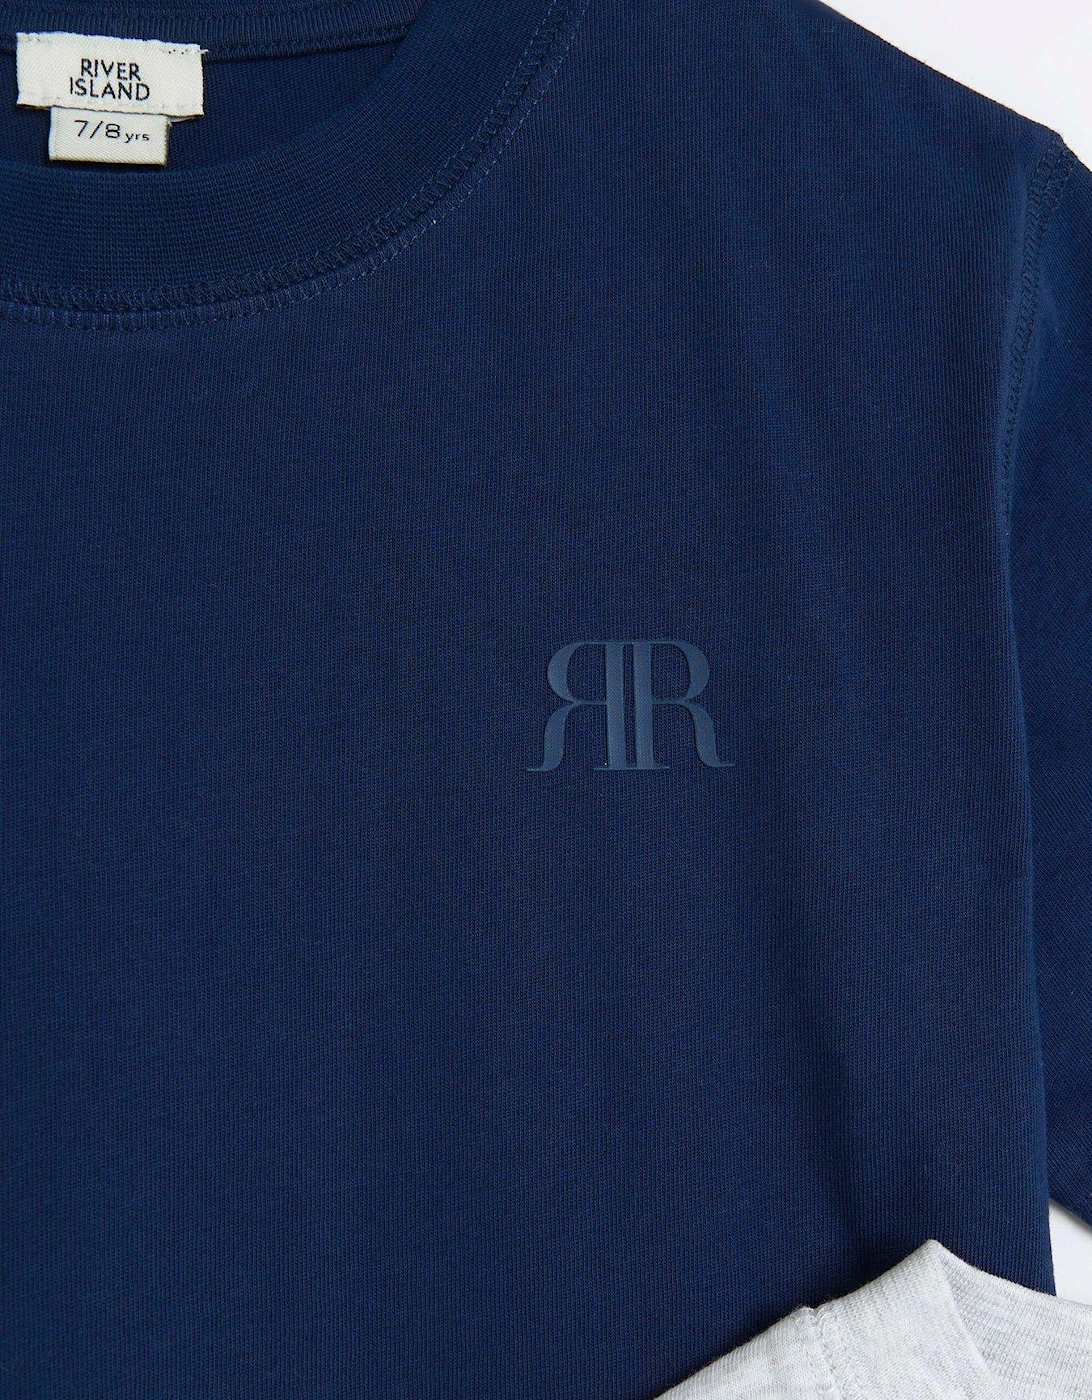 Boys Ri T-shirt 2 Pack - Grey